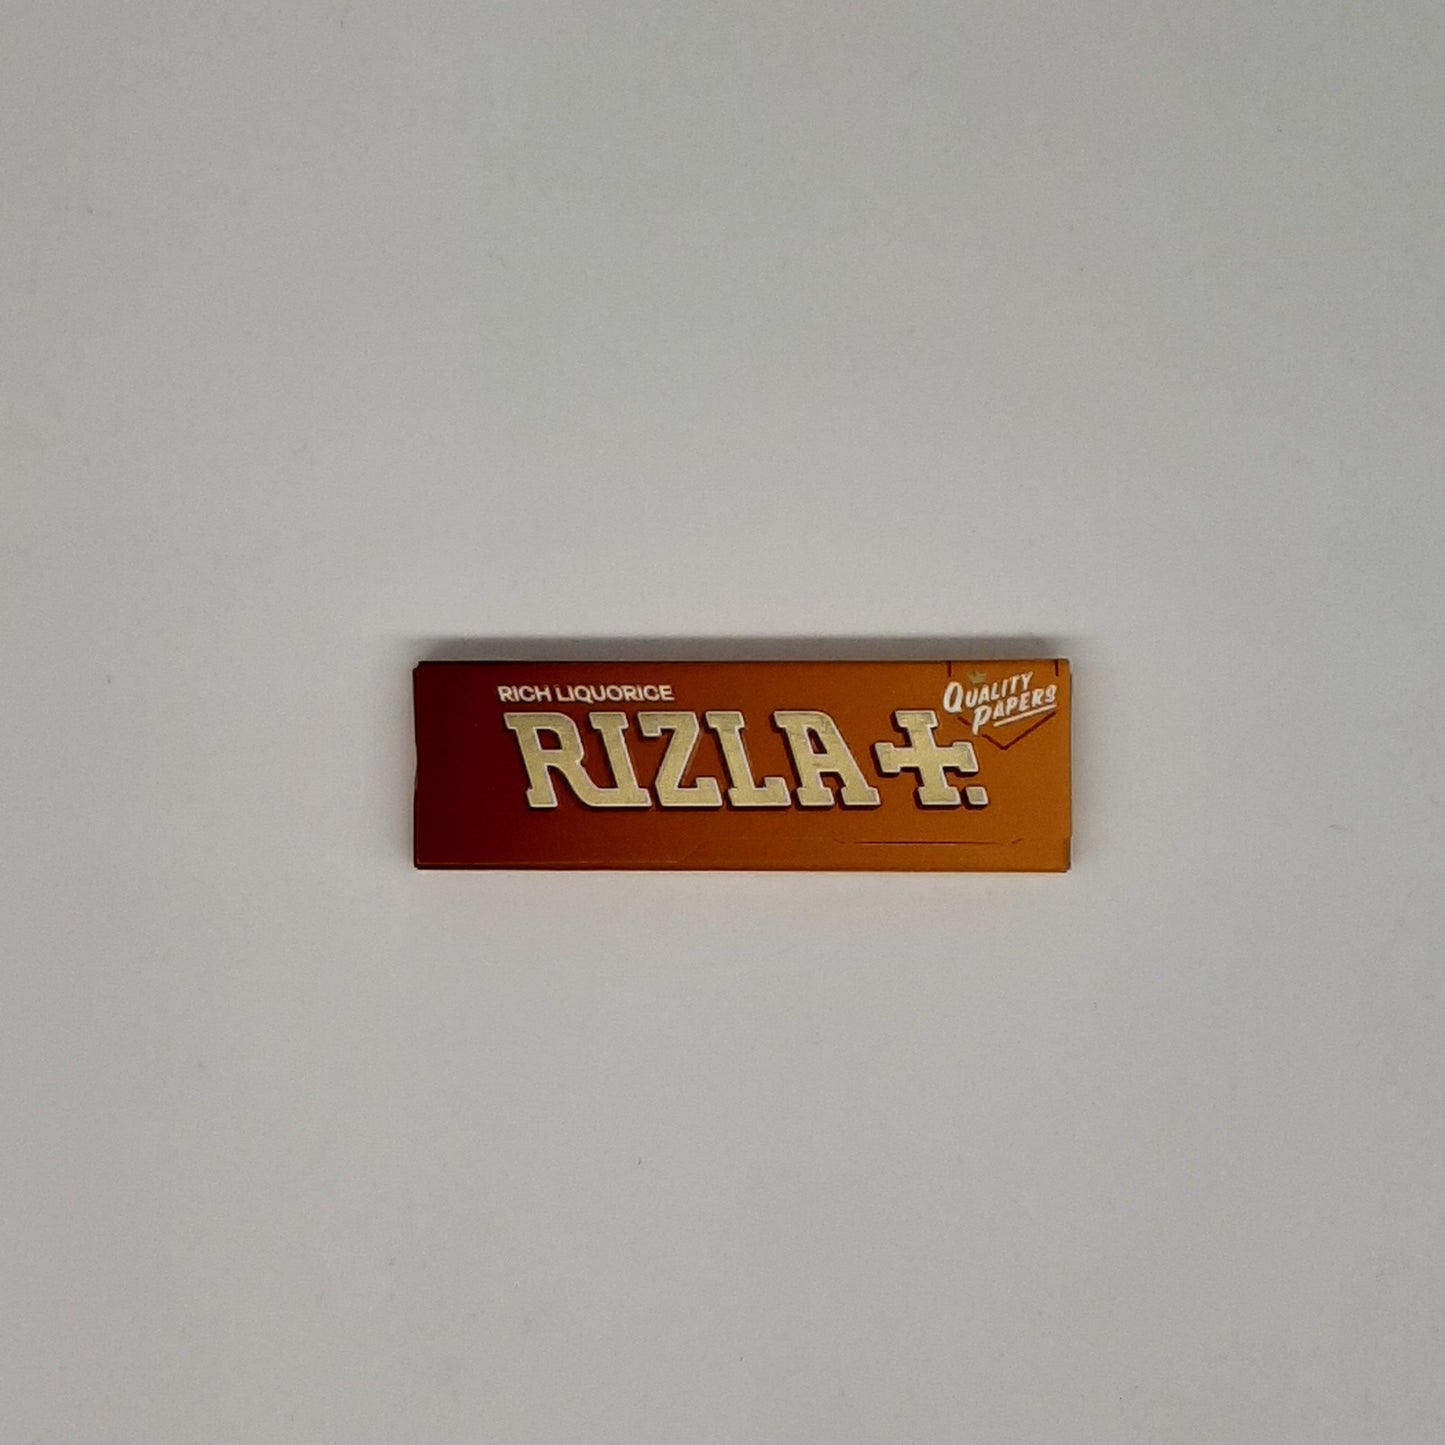 RIZLA Premium Single-Wide Papers